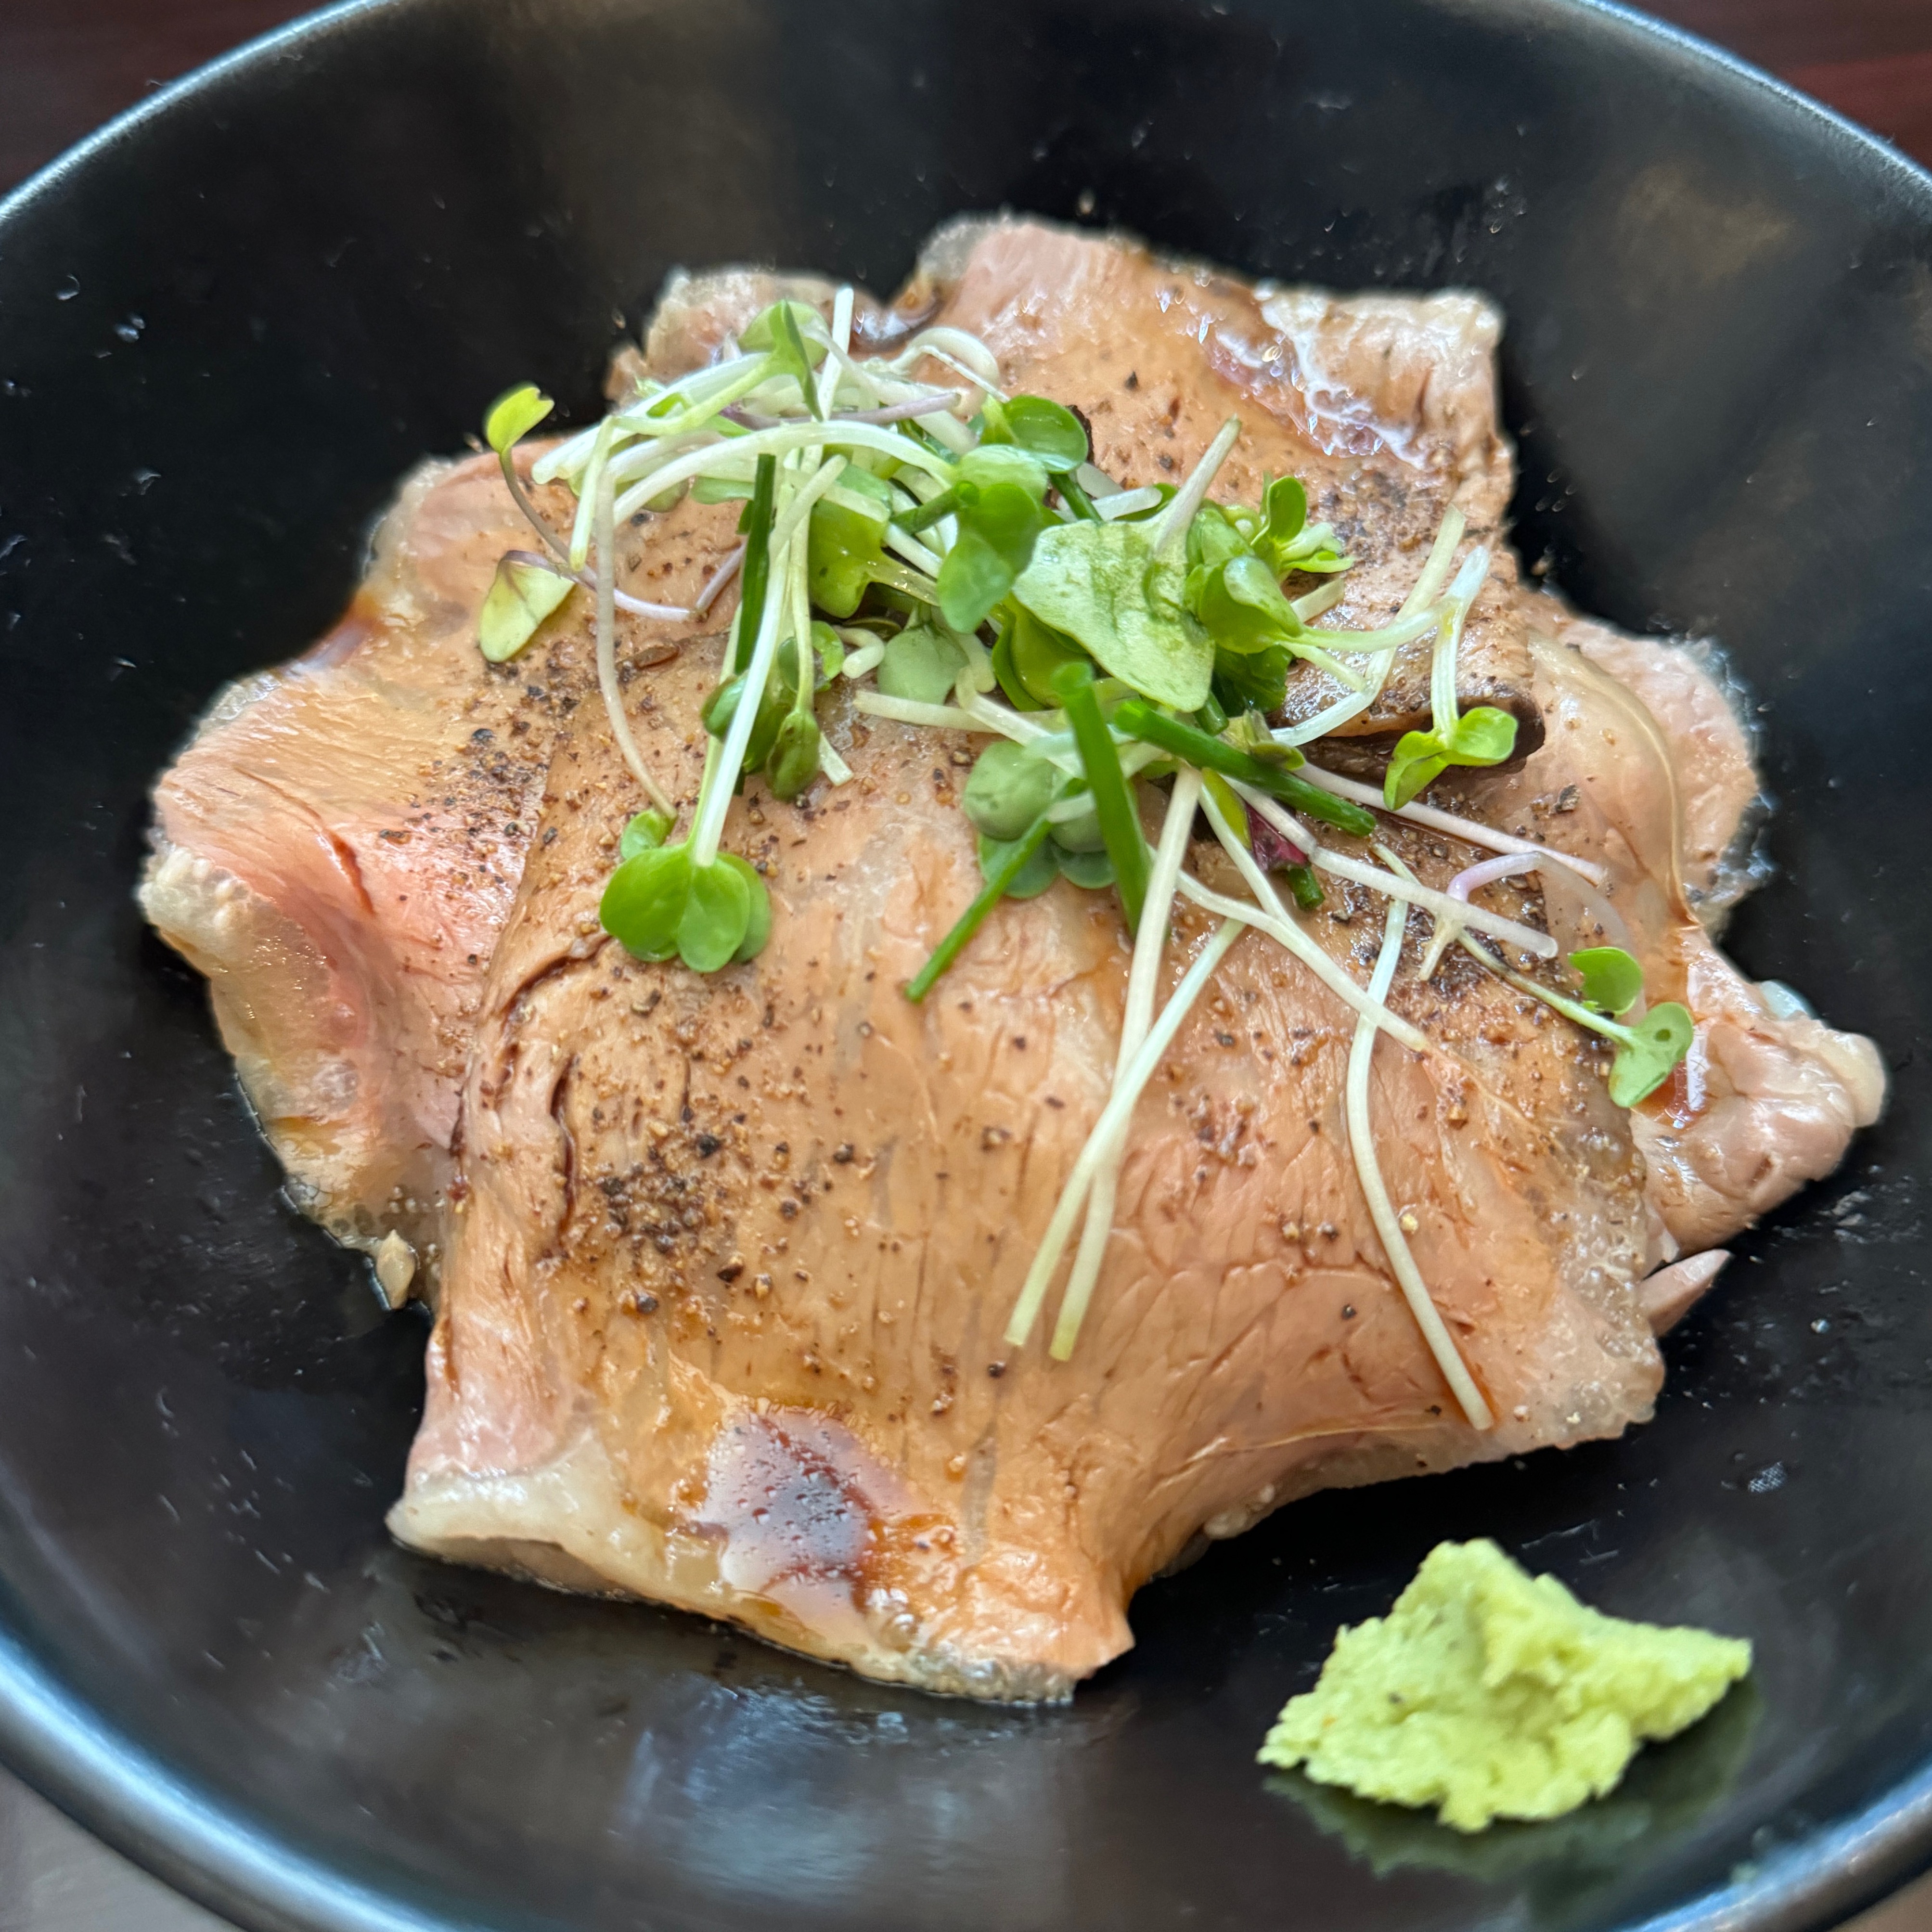 Roast Beef Bowl $19 from Wadatsumi on #foodmento http://foodmento.com/dish/47786